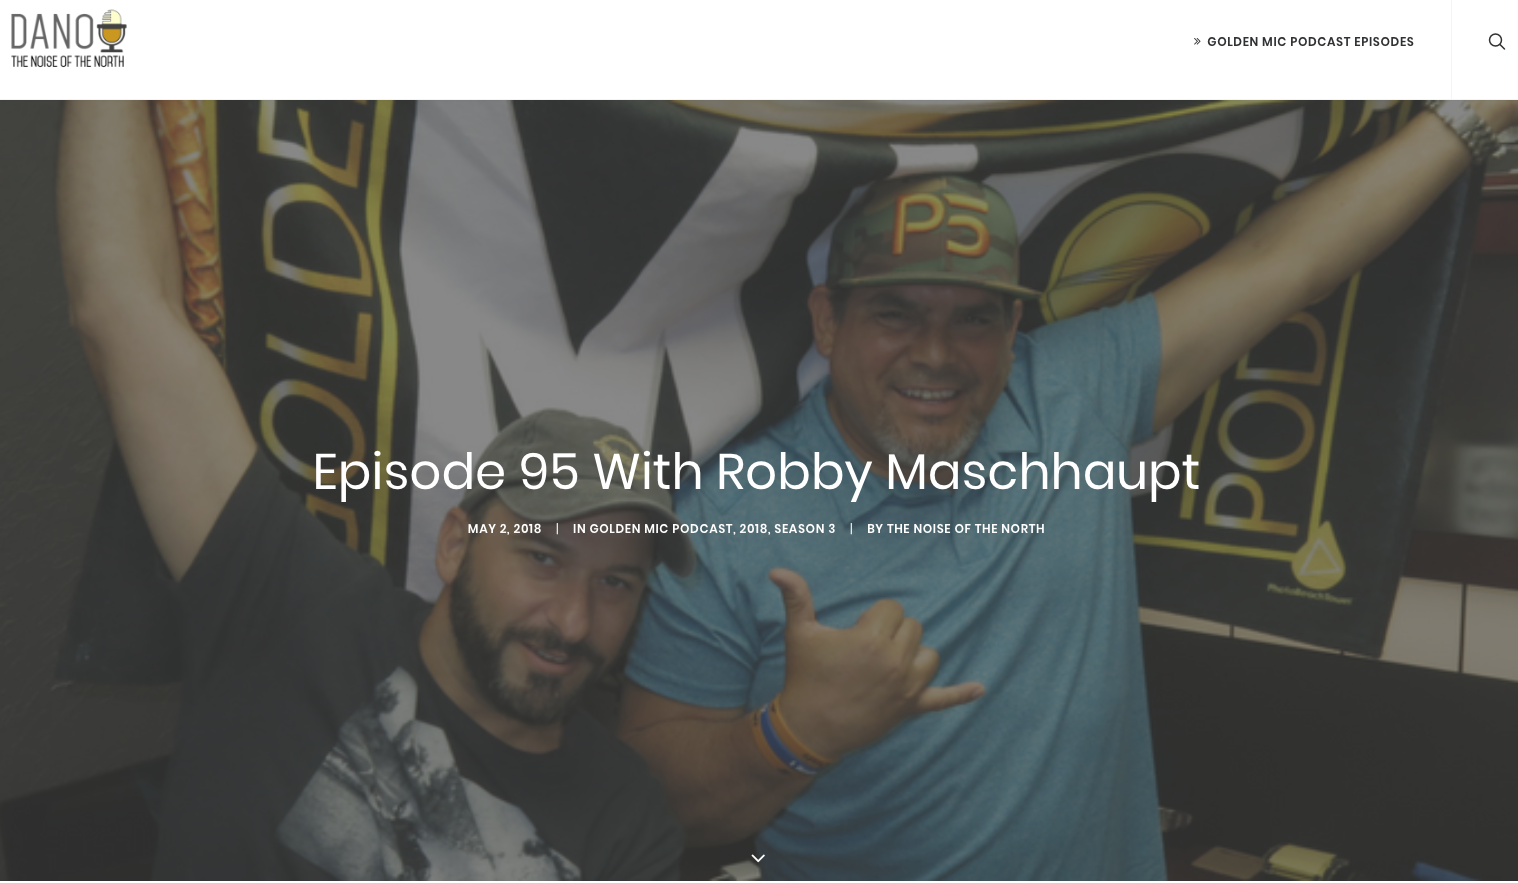 Seadek Golden Mic Podcast Robby Maschhaupt Dano the mano Danny Amir wakeboarding pass the handle